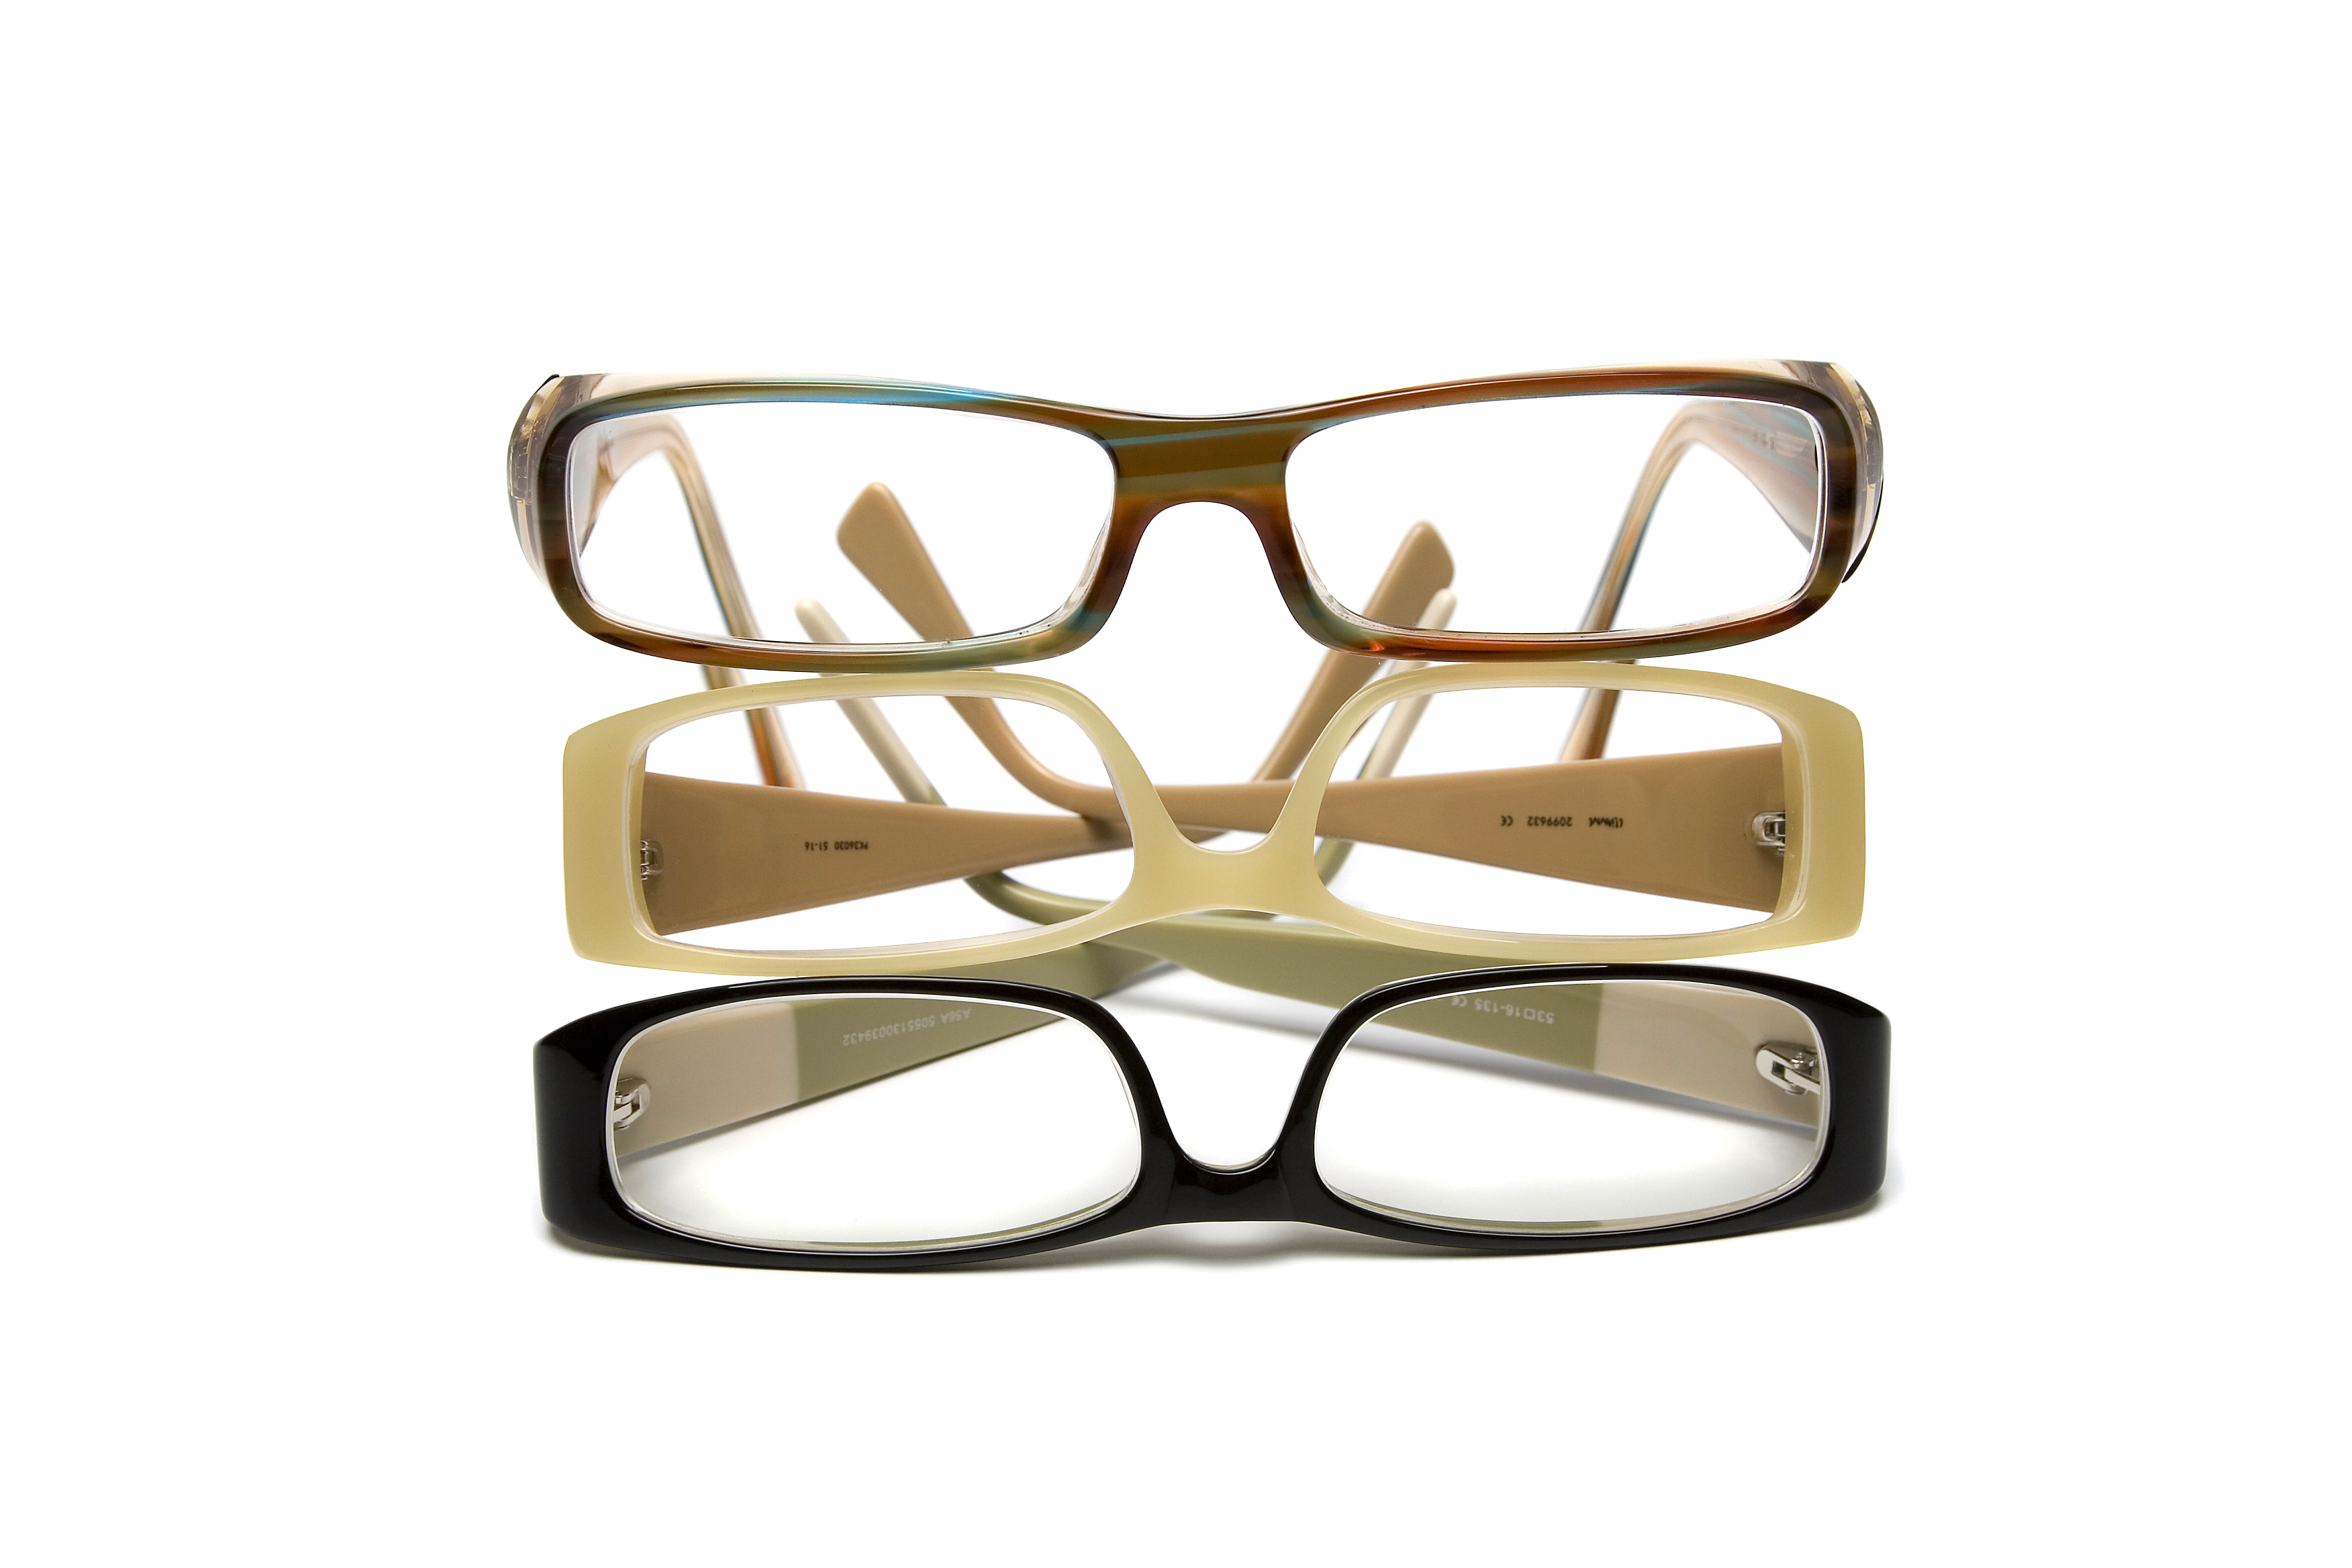 Eyeglasses: The Accessory